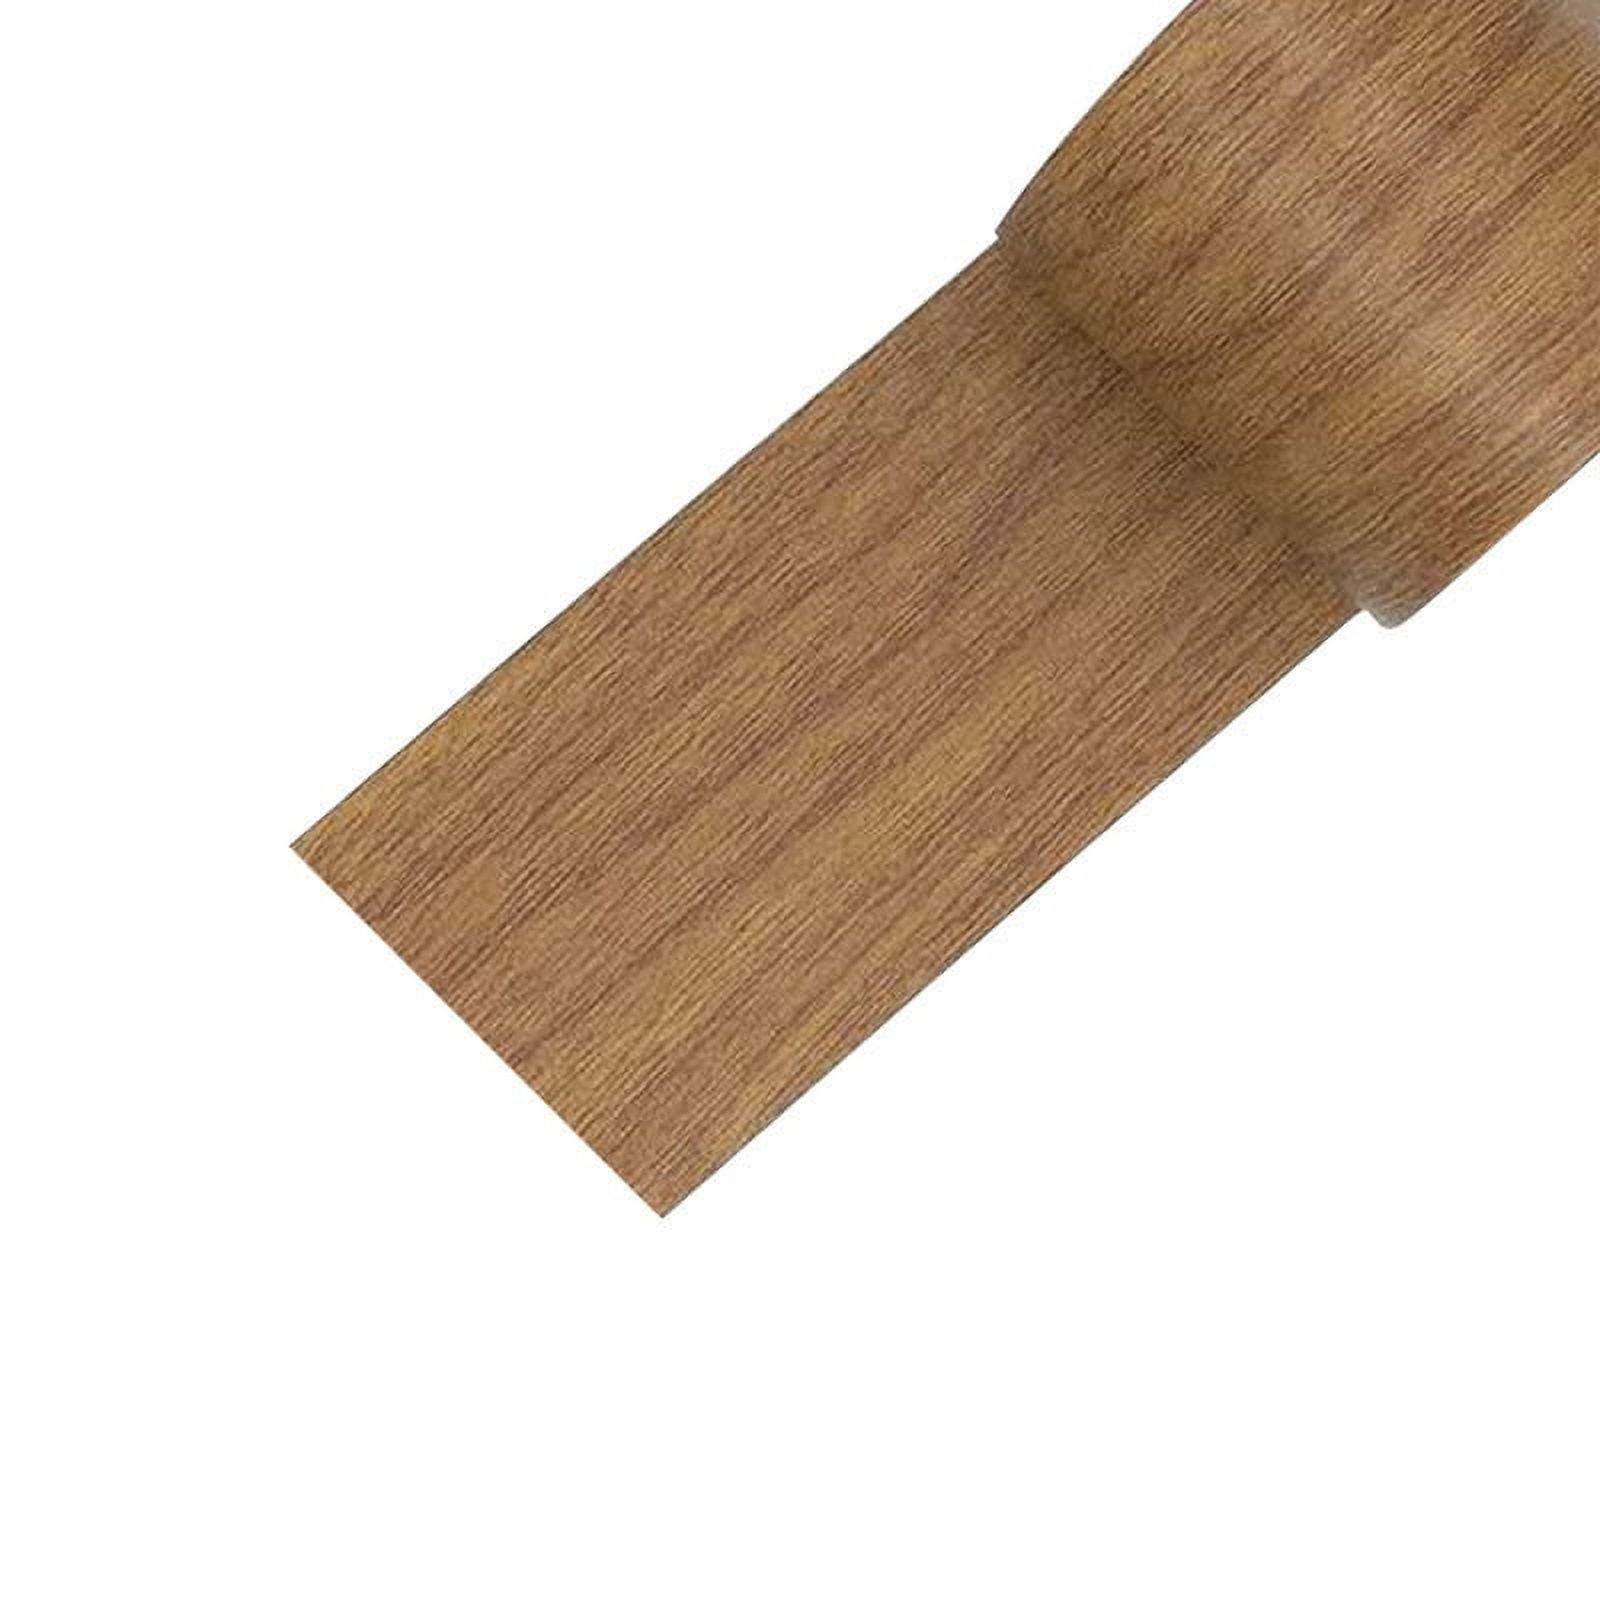 SOLUSTRE 2 Pcs Wood Grain Tape Colored Binders Wood Furniture Woodsy Decor  Wood Grain Duct Tape Wood Grain Washi Tape Wood Colored Tape Door Furniture  Repair Tapes Wood Tapes Repair Patches 